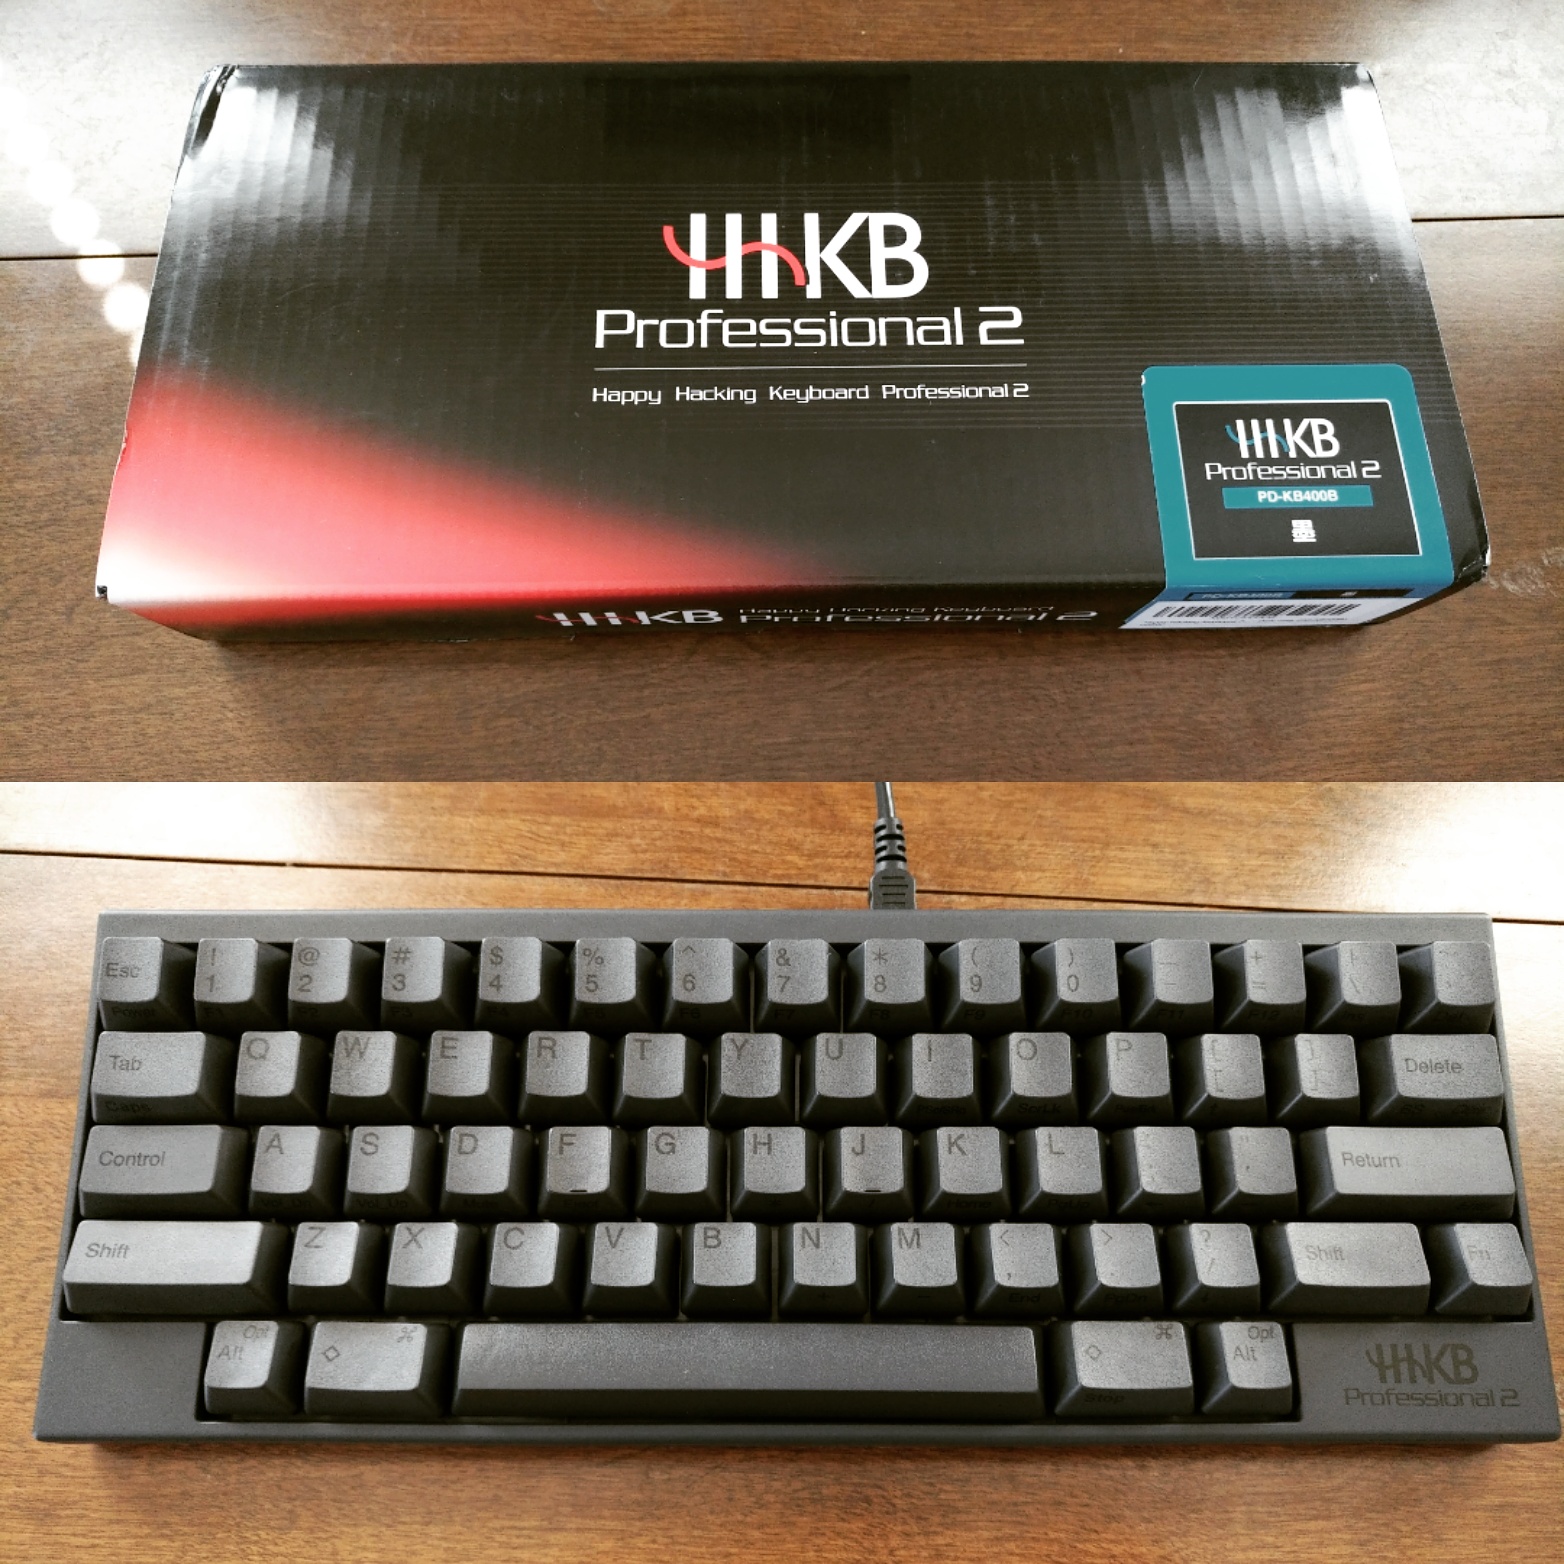 Getting the HHKB Keyboard